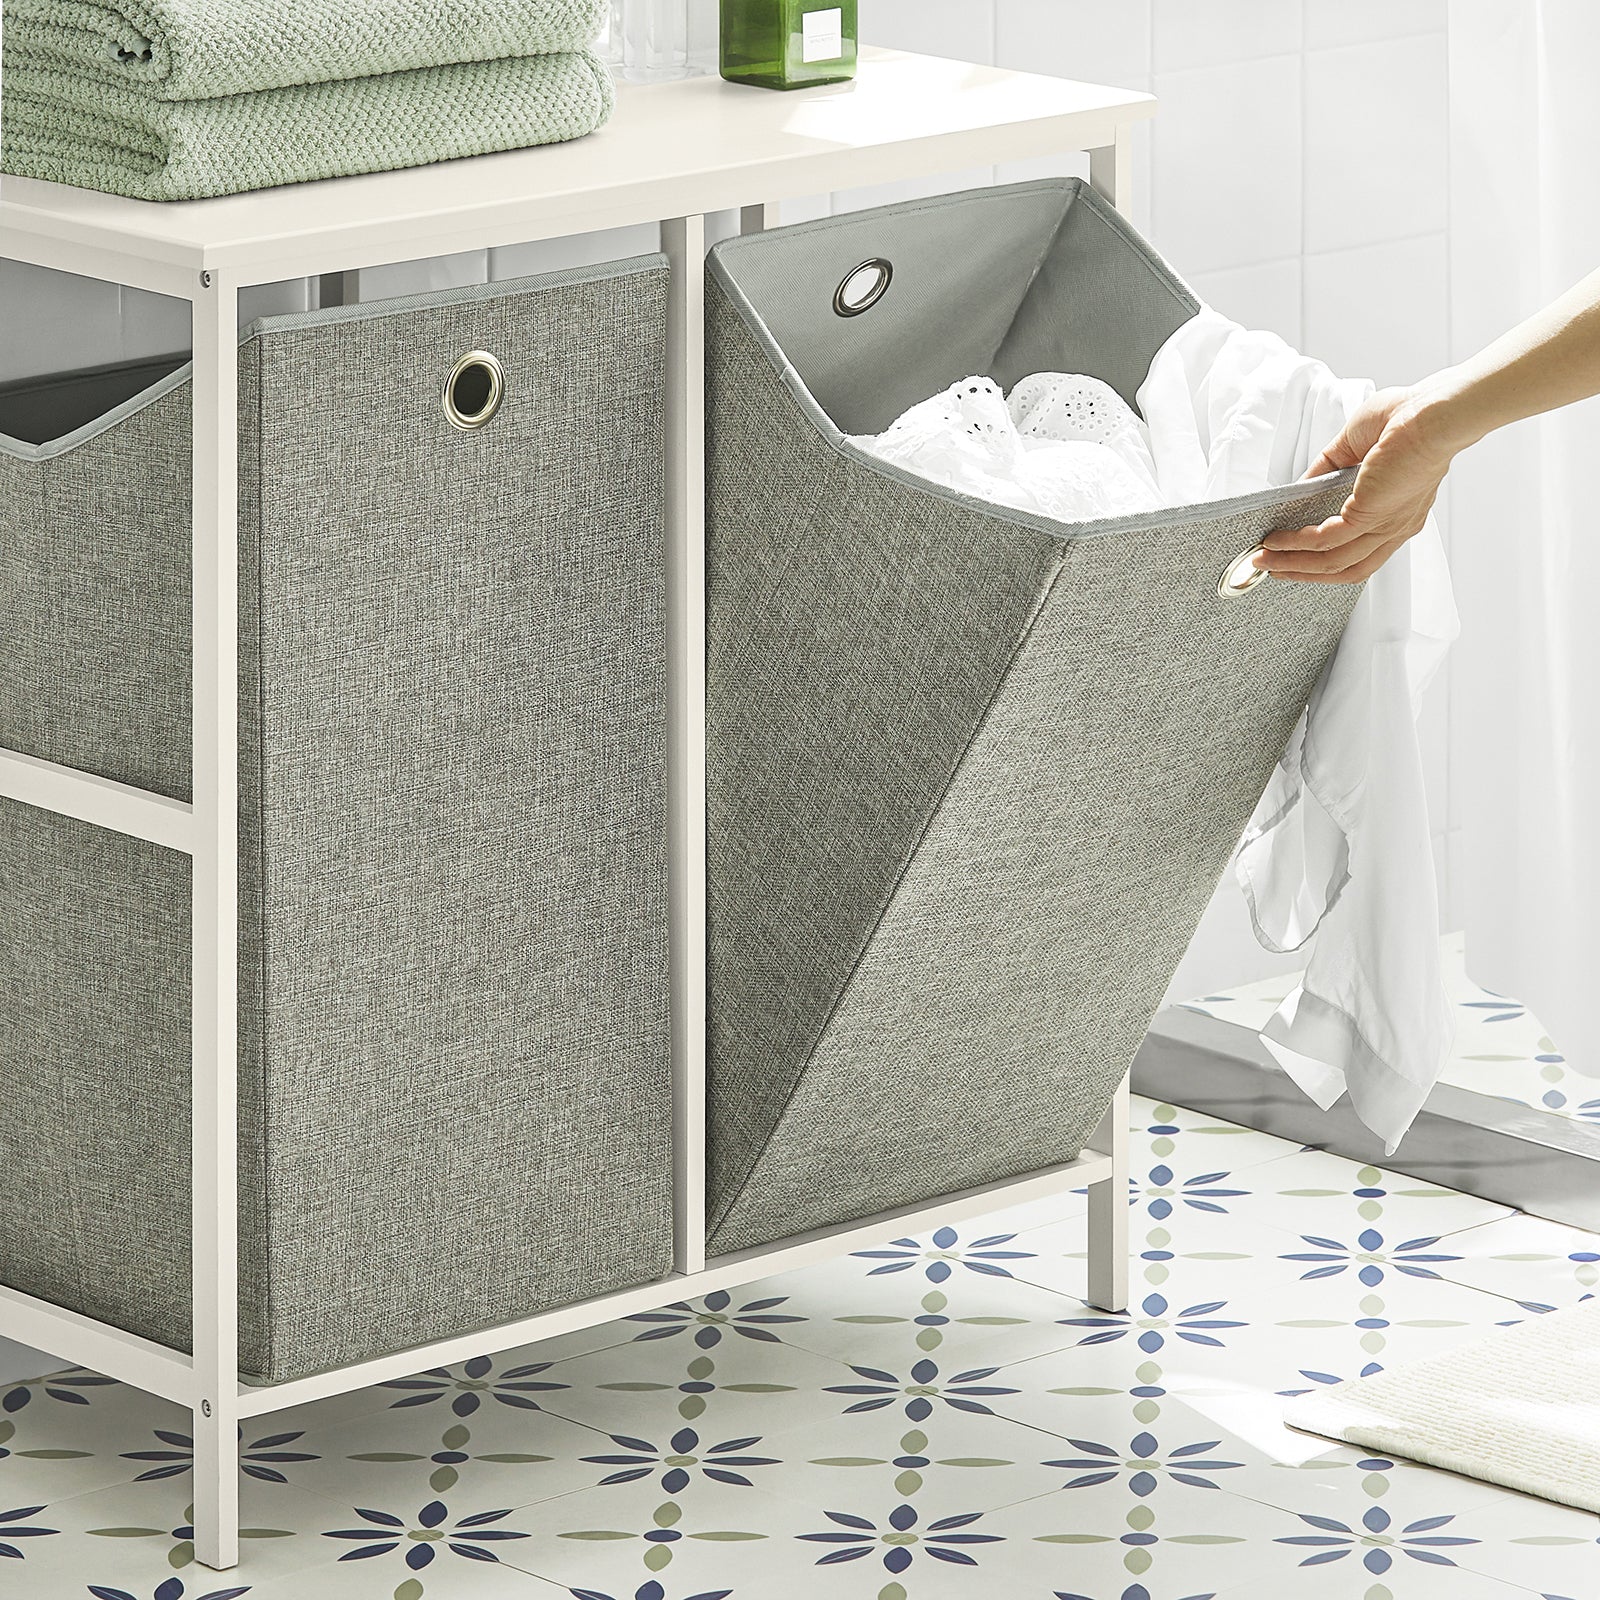 SoBuy BZR57-W Laundry Cabinet Laundry Chest with 2 Removable Laundry Baskets, Bathroom Storage Shelf Rack